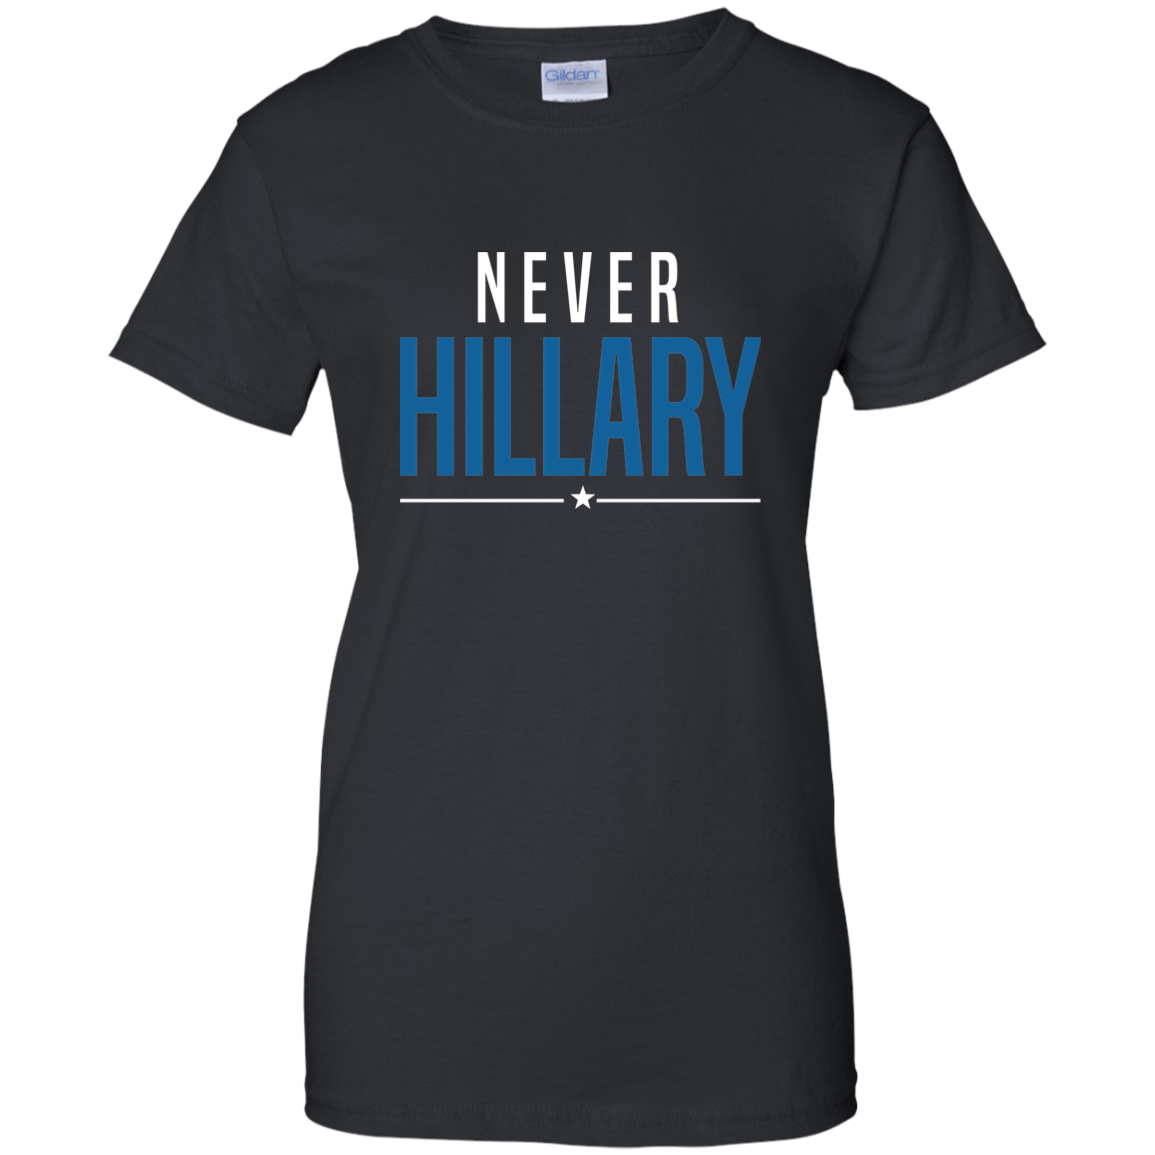 Never Hillary Ladies Tee